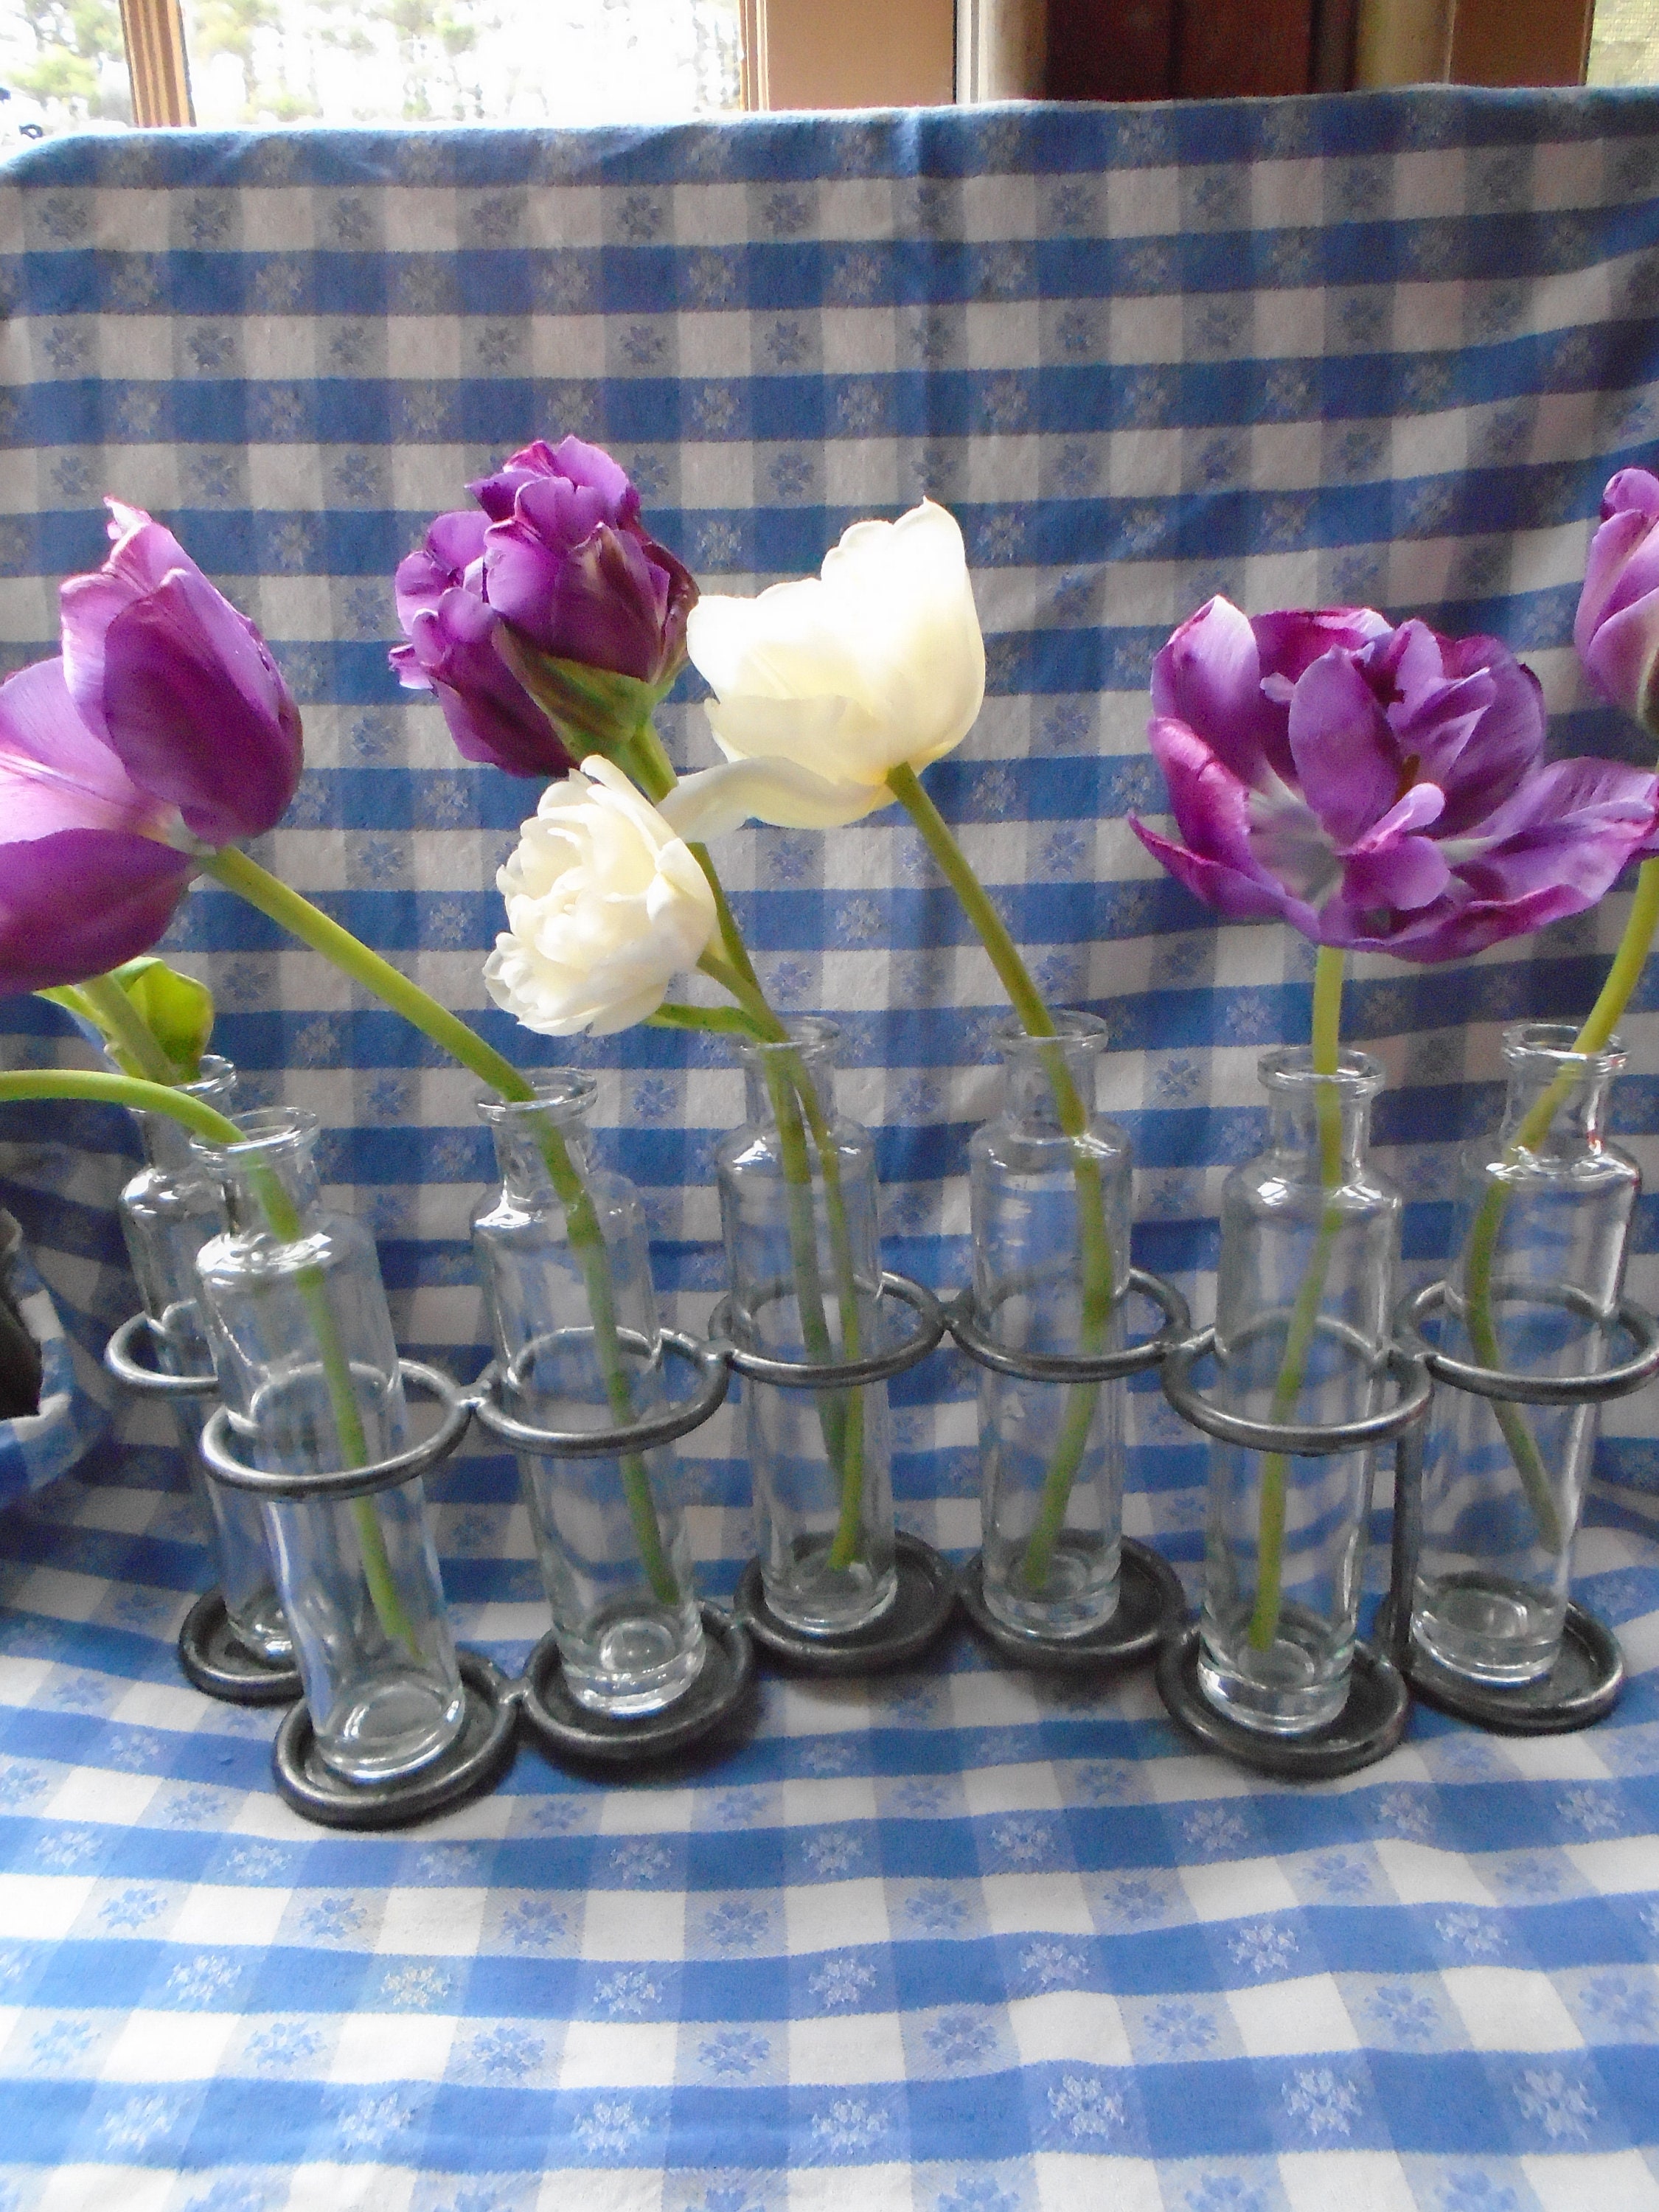 Hinged Flower Vase,Hinged Flower Vases Test Tube,Hinged Flower Vase for  Flowers,Foldable Flower Vase with Hinged Design,Flower Vase Glass Test  Tubes